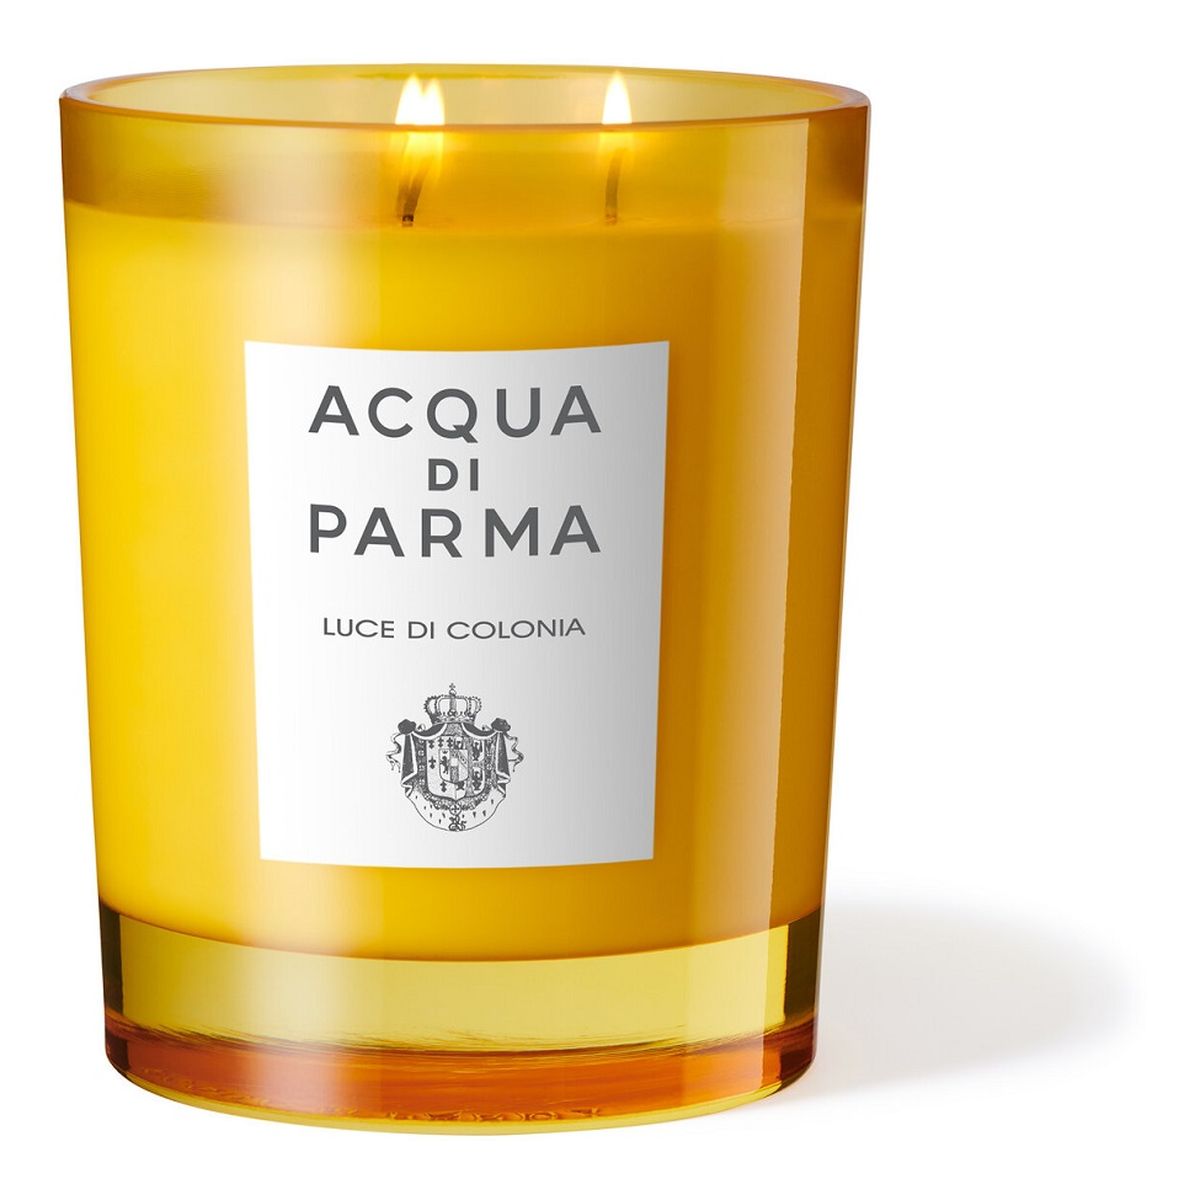 Acqua Di Parma Luce di colonia świeca zapachowa 500g 500g